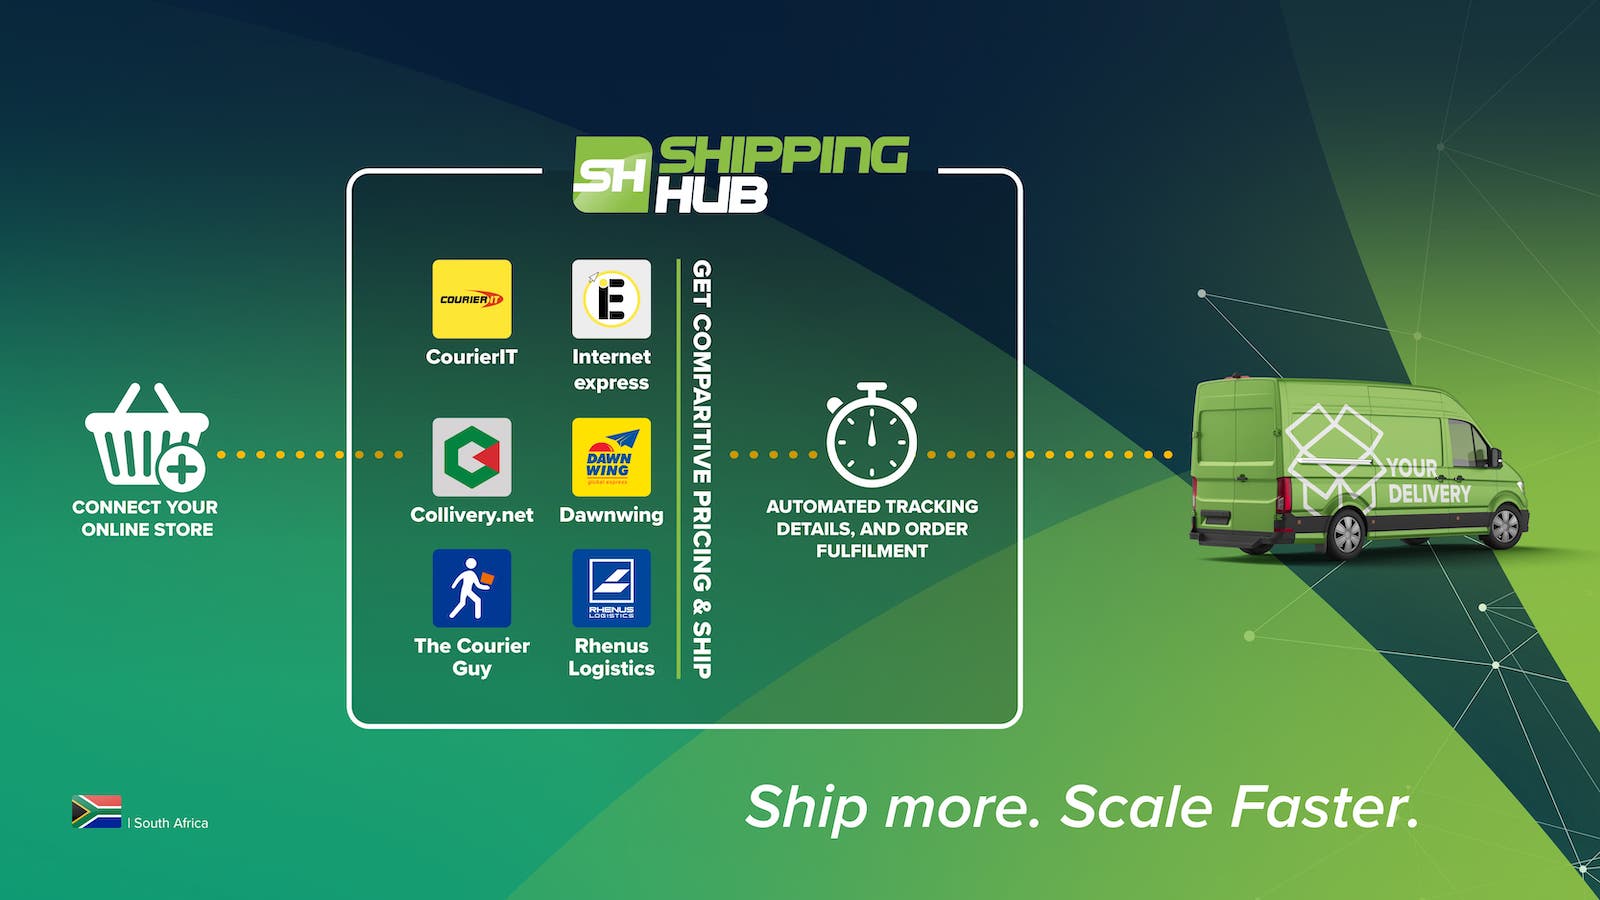 Shipping Hub settings screen